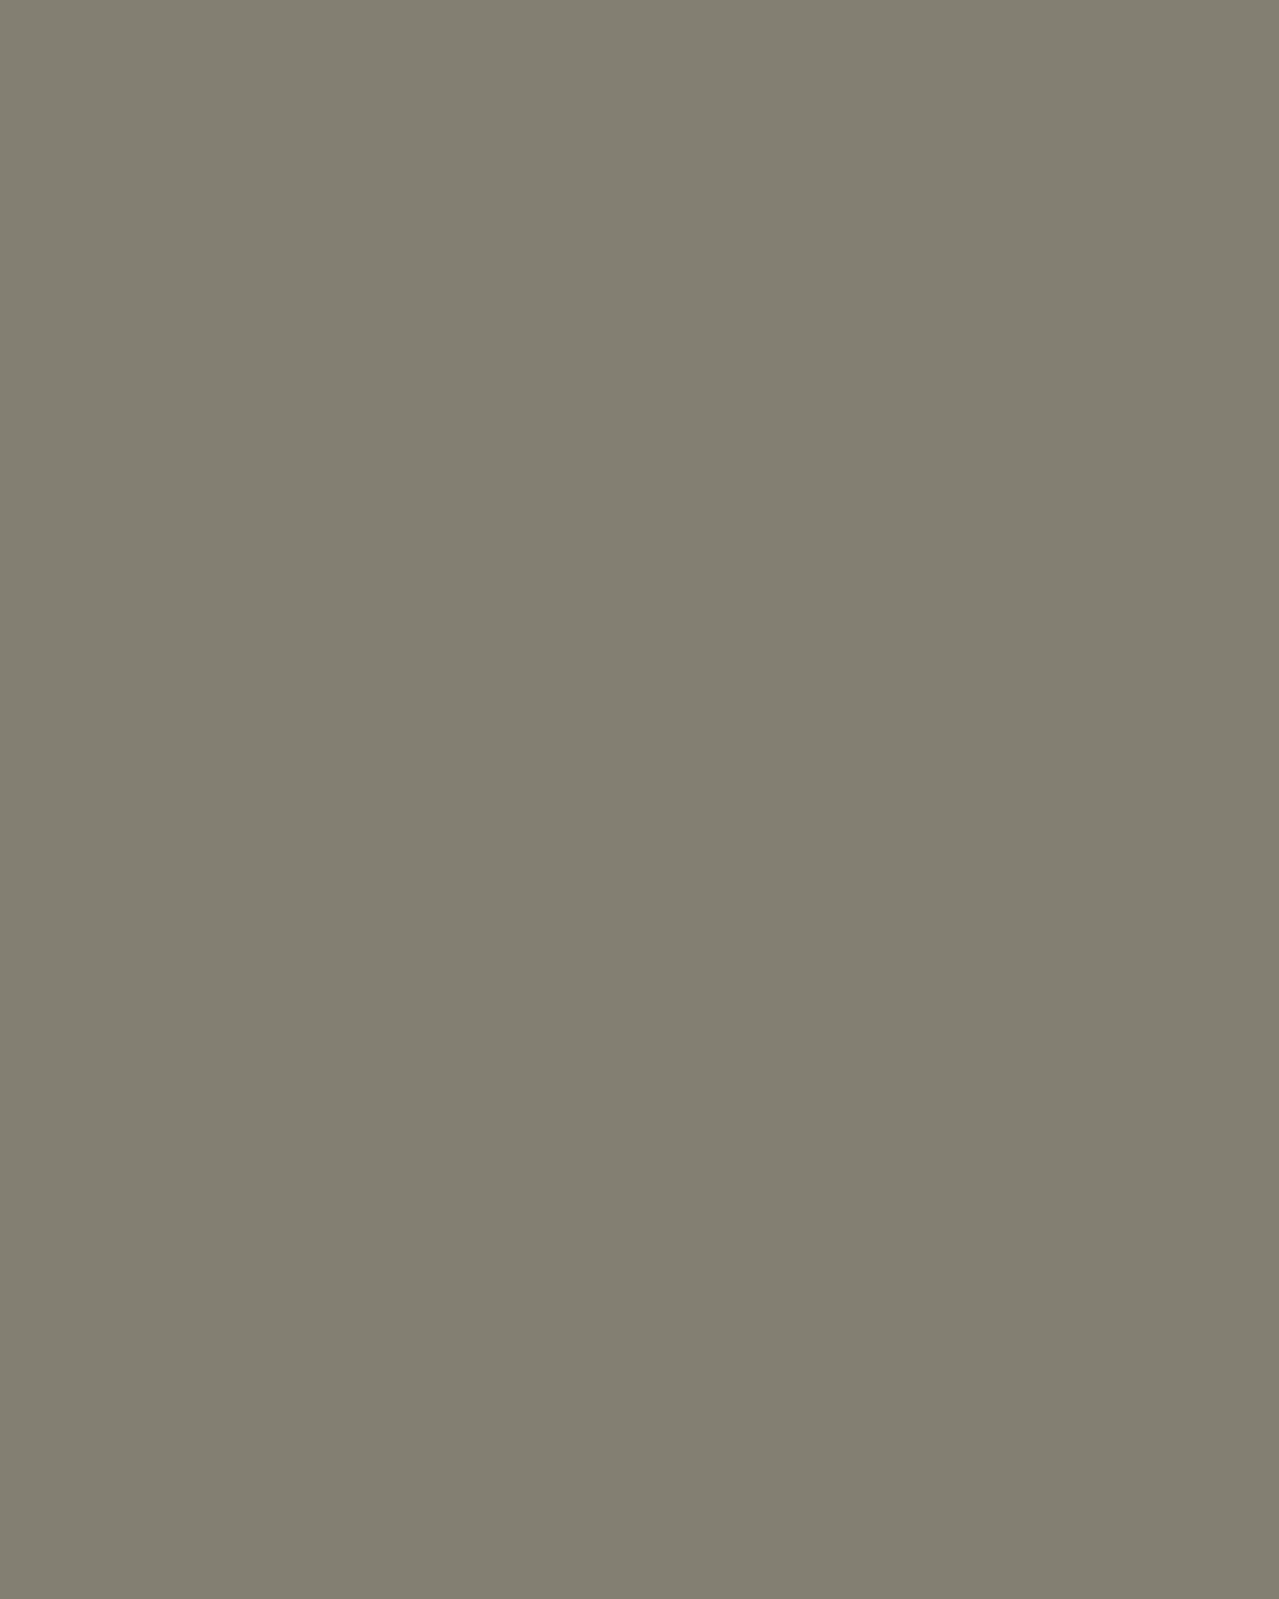 Анна Голубкина. Скульптура «Старость». 1898. Музей-мастерская А. Голубкиной, Москва. Фотография: shakko / <a href="https://commons.wikimedia.org/w/index.php?curid=31013065" target="_blank" rel="noopener">commons.wikimedia</a> / <a href="https://creativecommons.org/licenses/by-sa/3.0" target="_blank" rel="noopener">CC BY-SA 3.0</a>